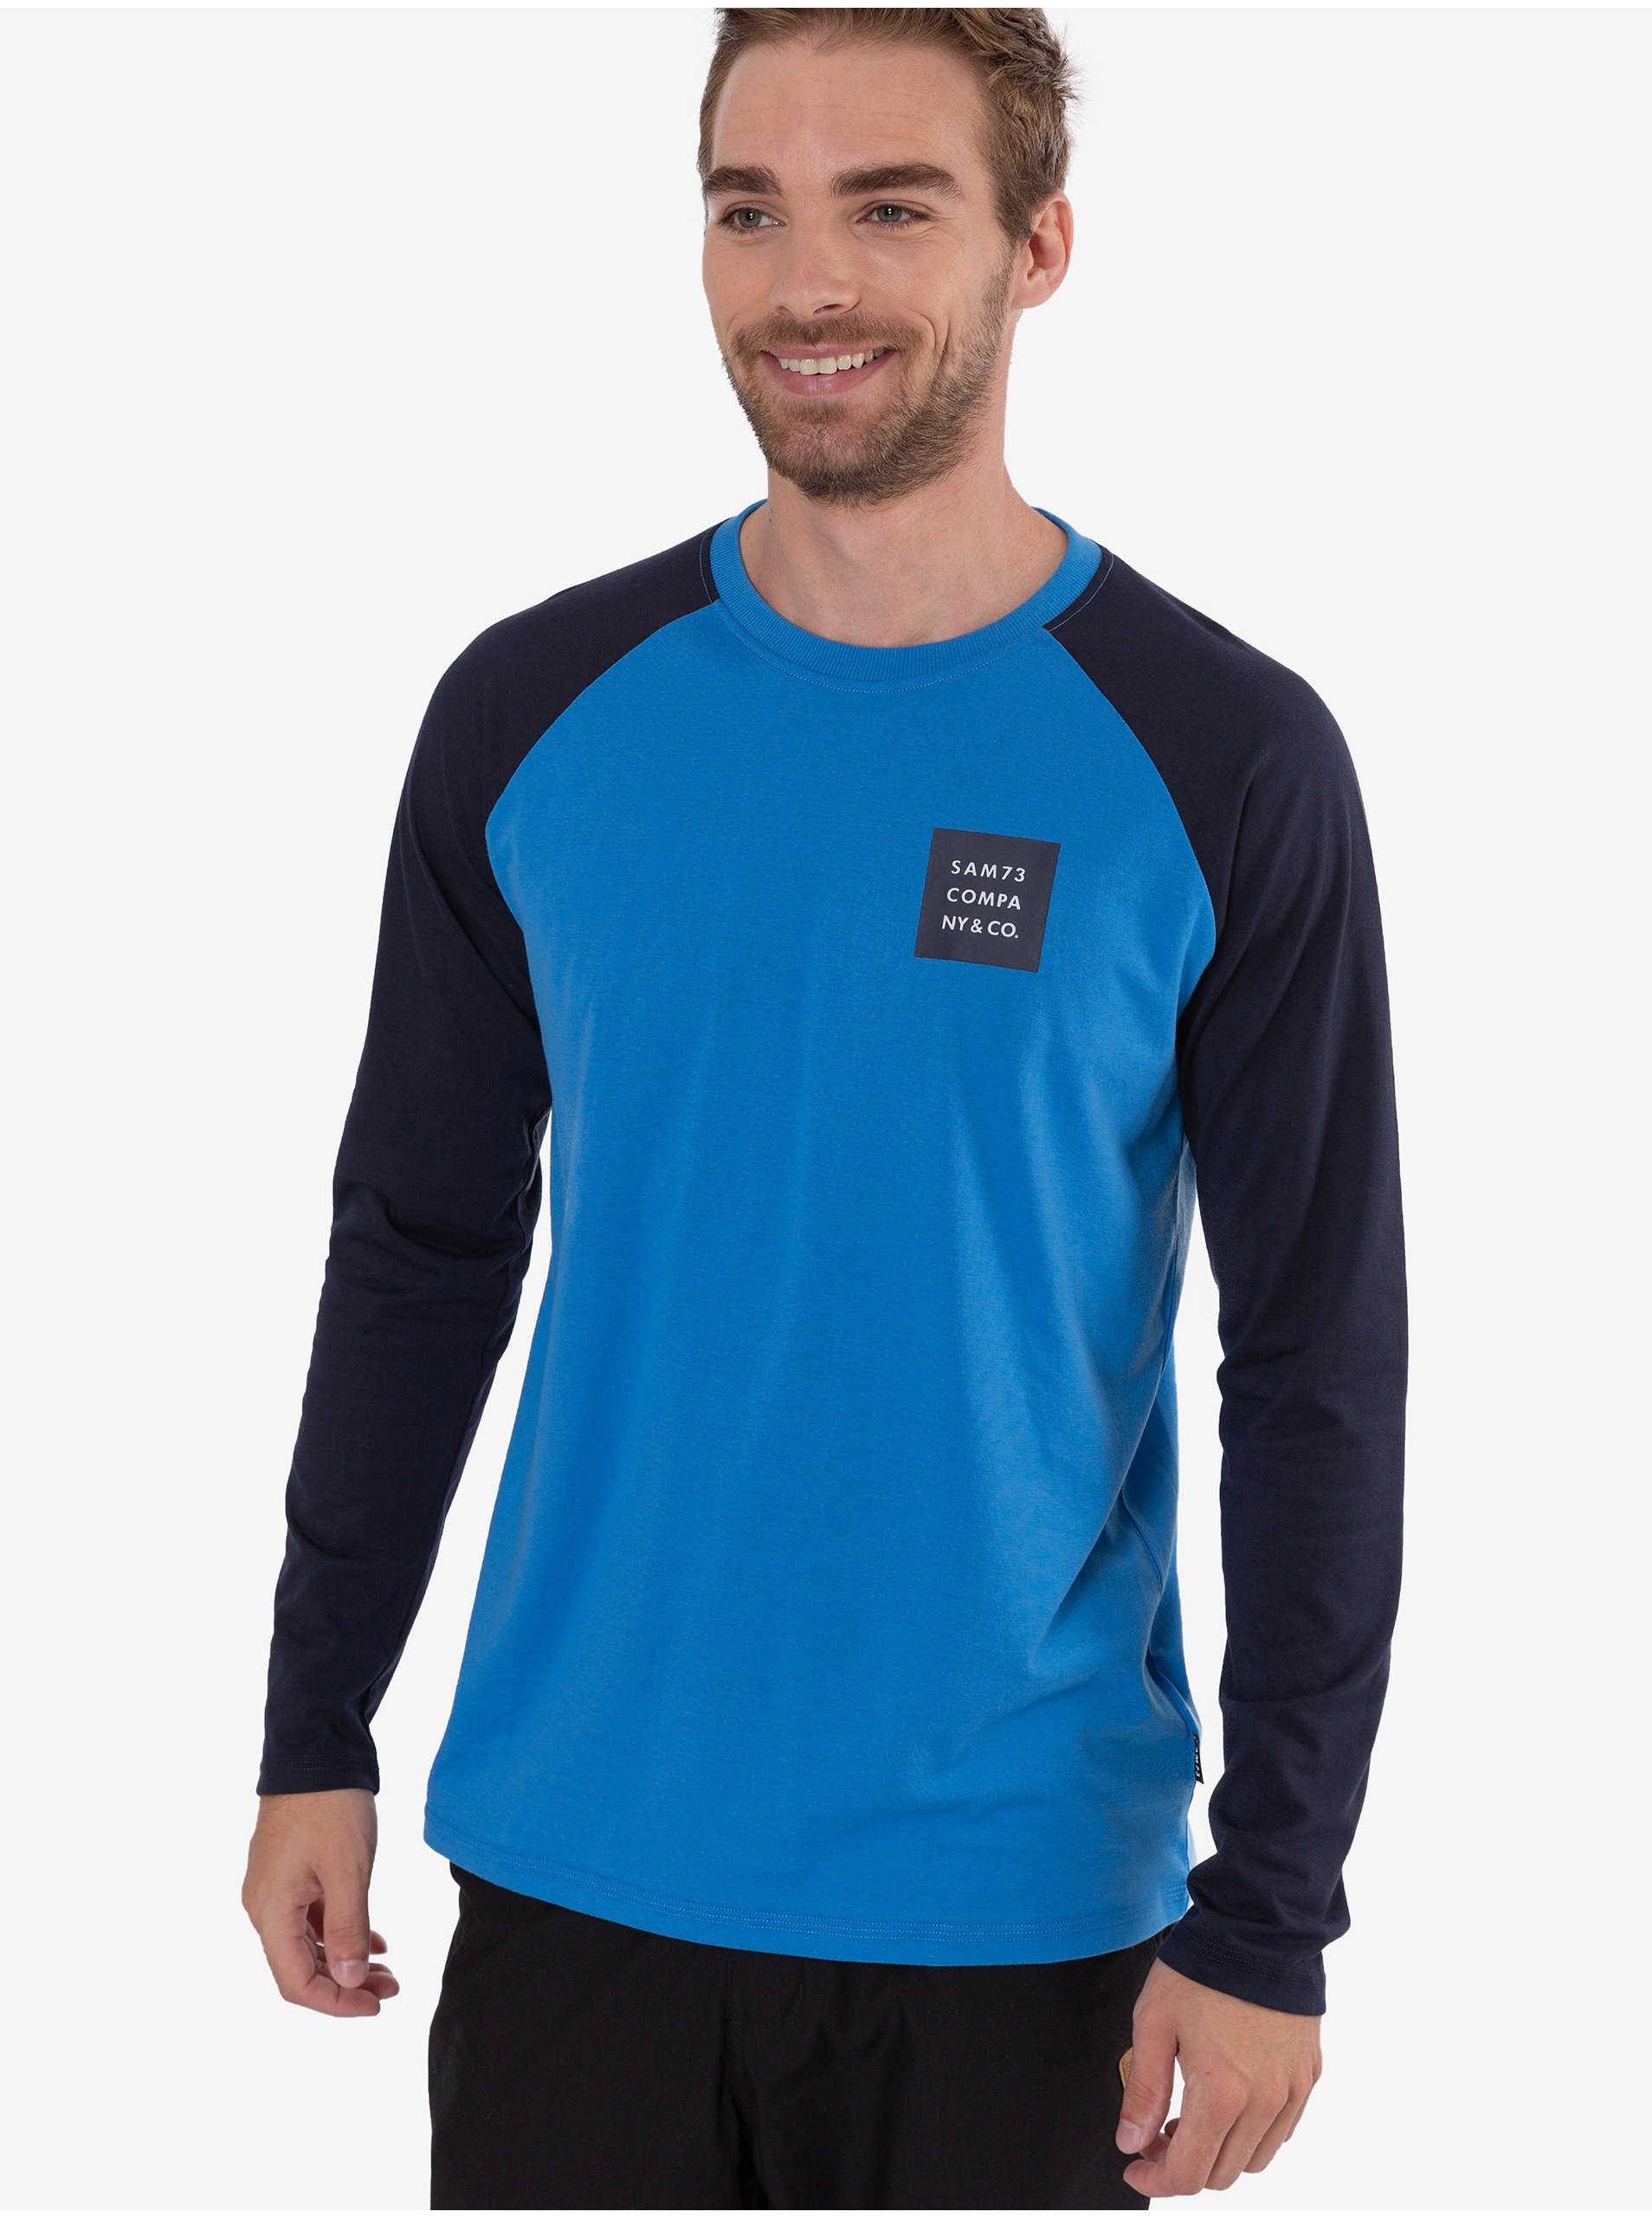 E-shop Černo-modré pánské tričko Sam 73